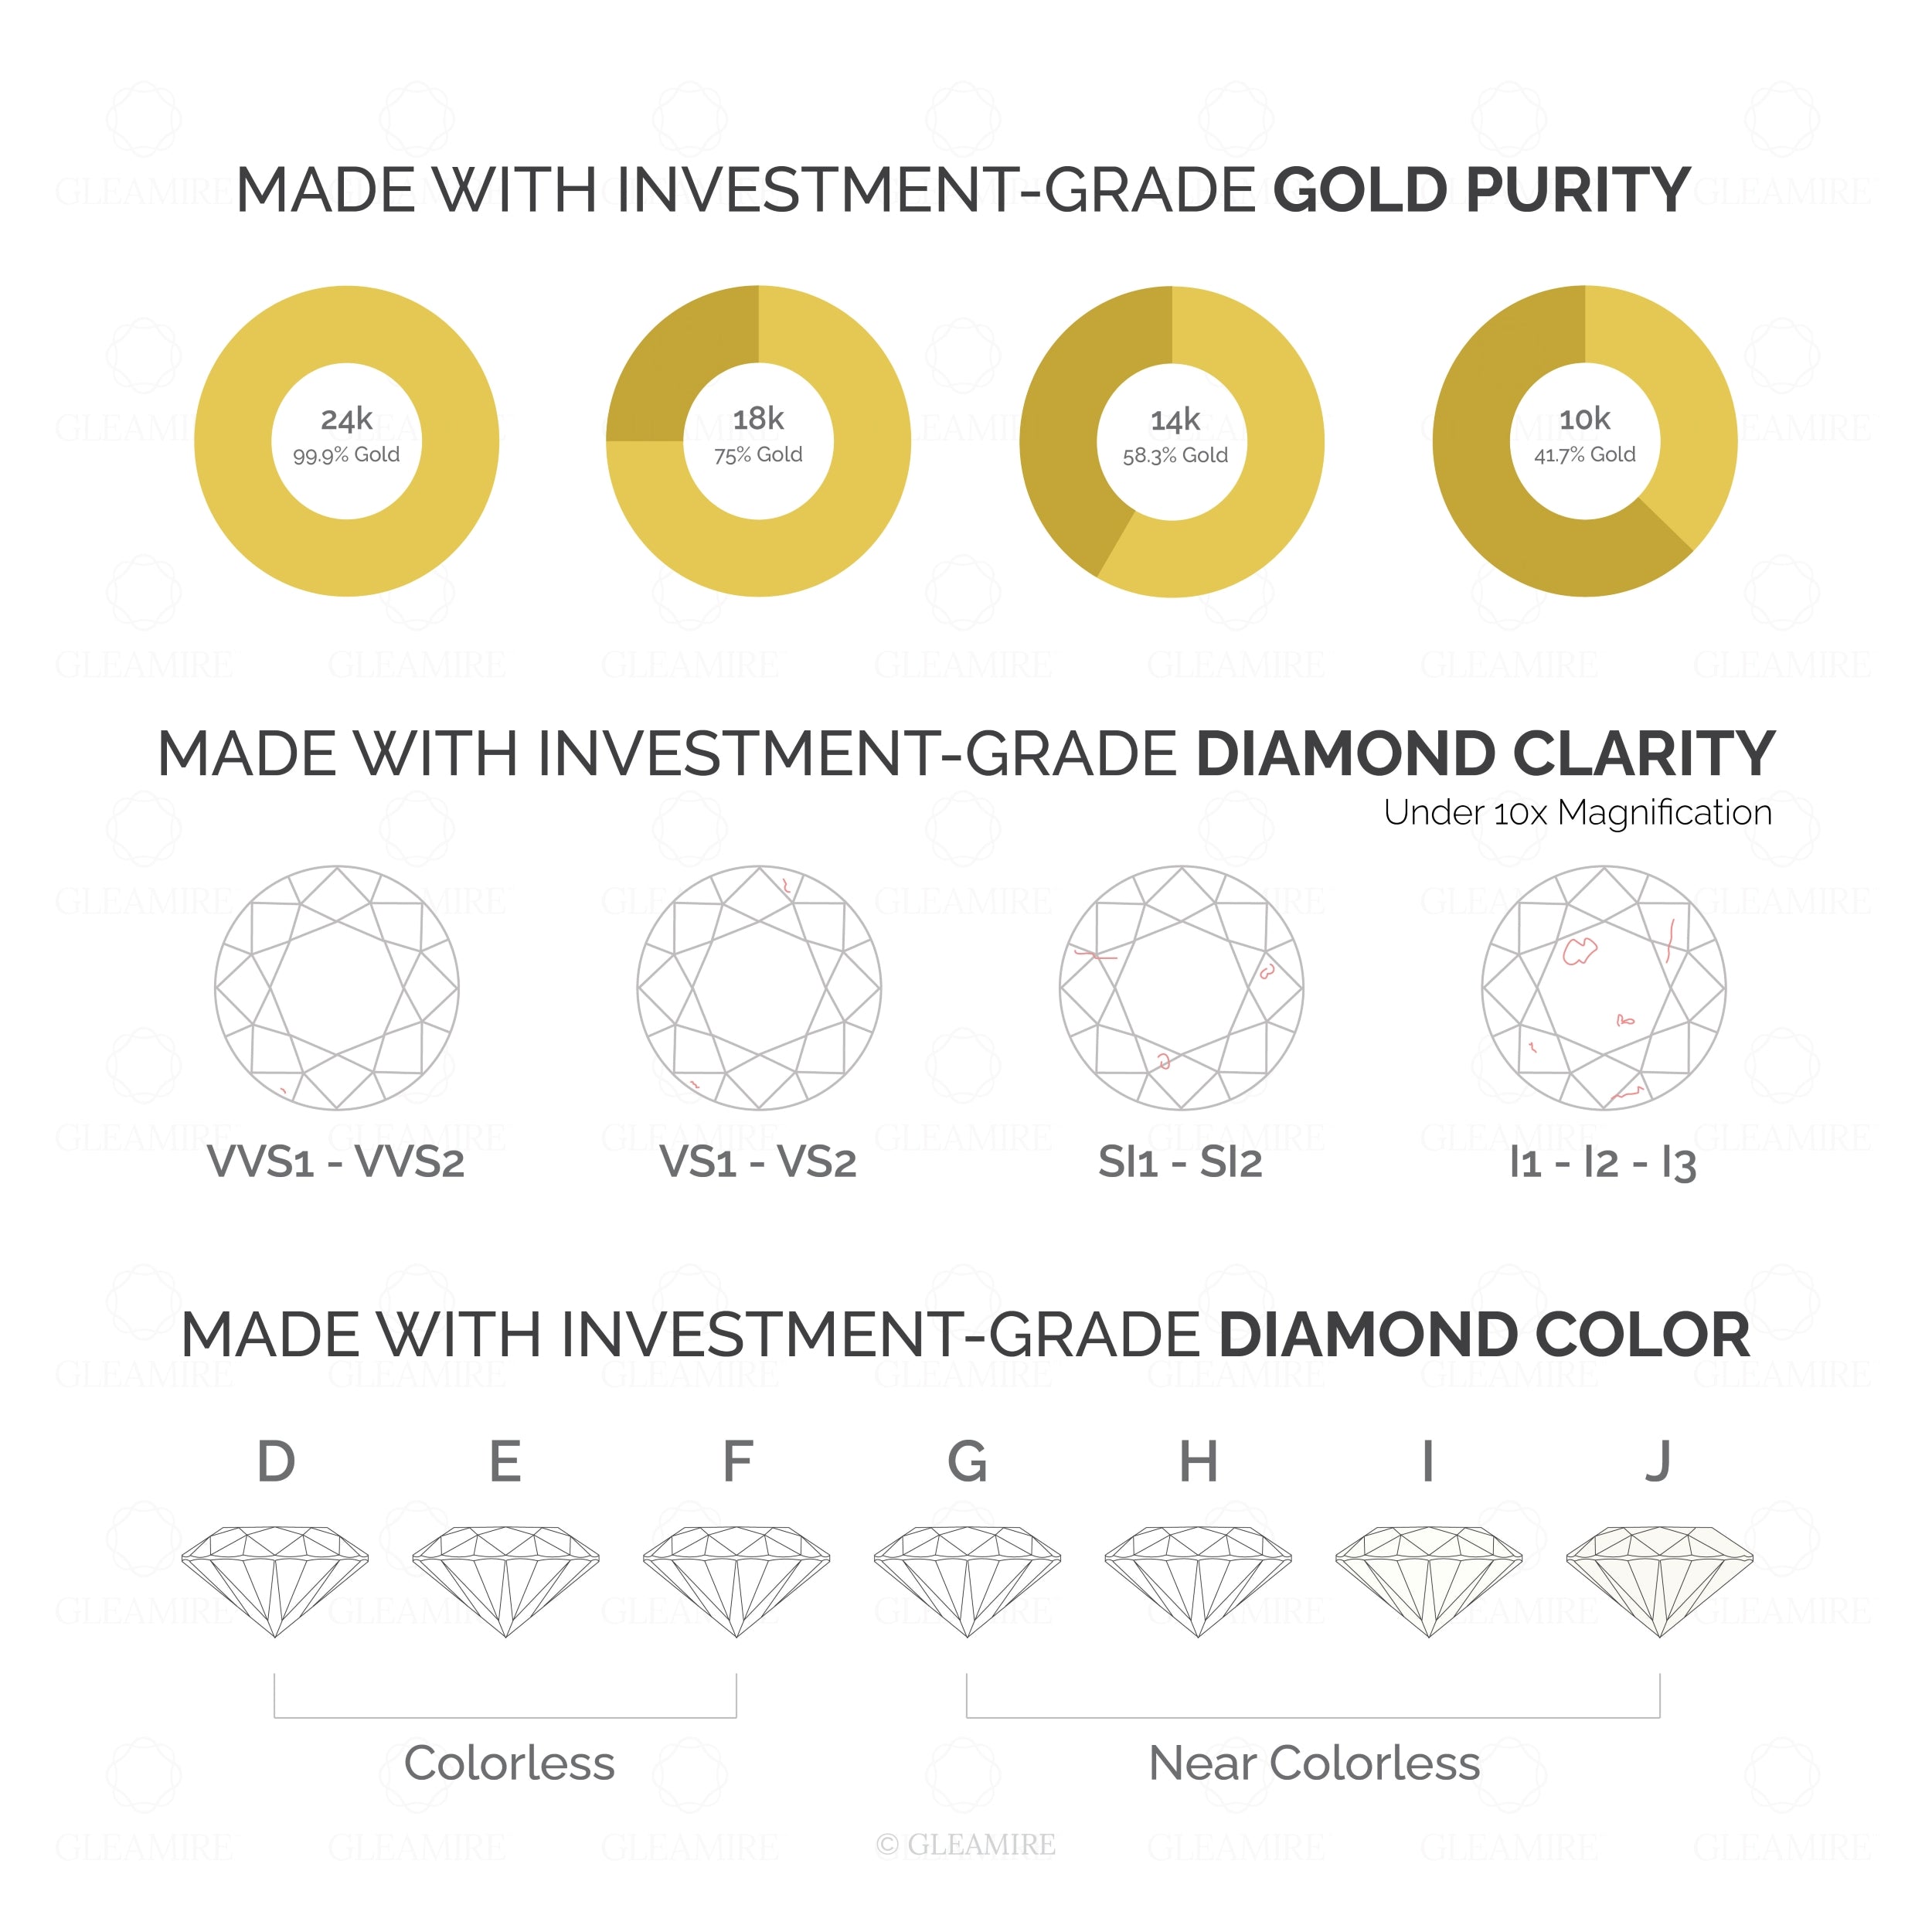 Certified 14K Gold 0.4ct Natural Diamond F-VS Heart Charm White Pendant White Necklace